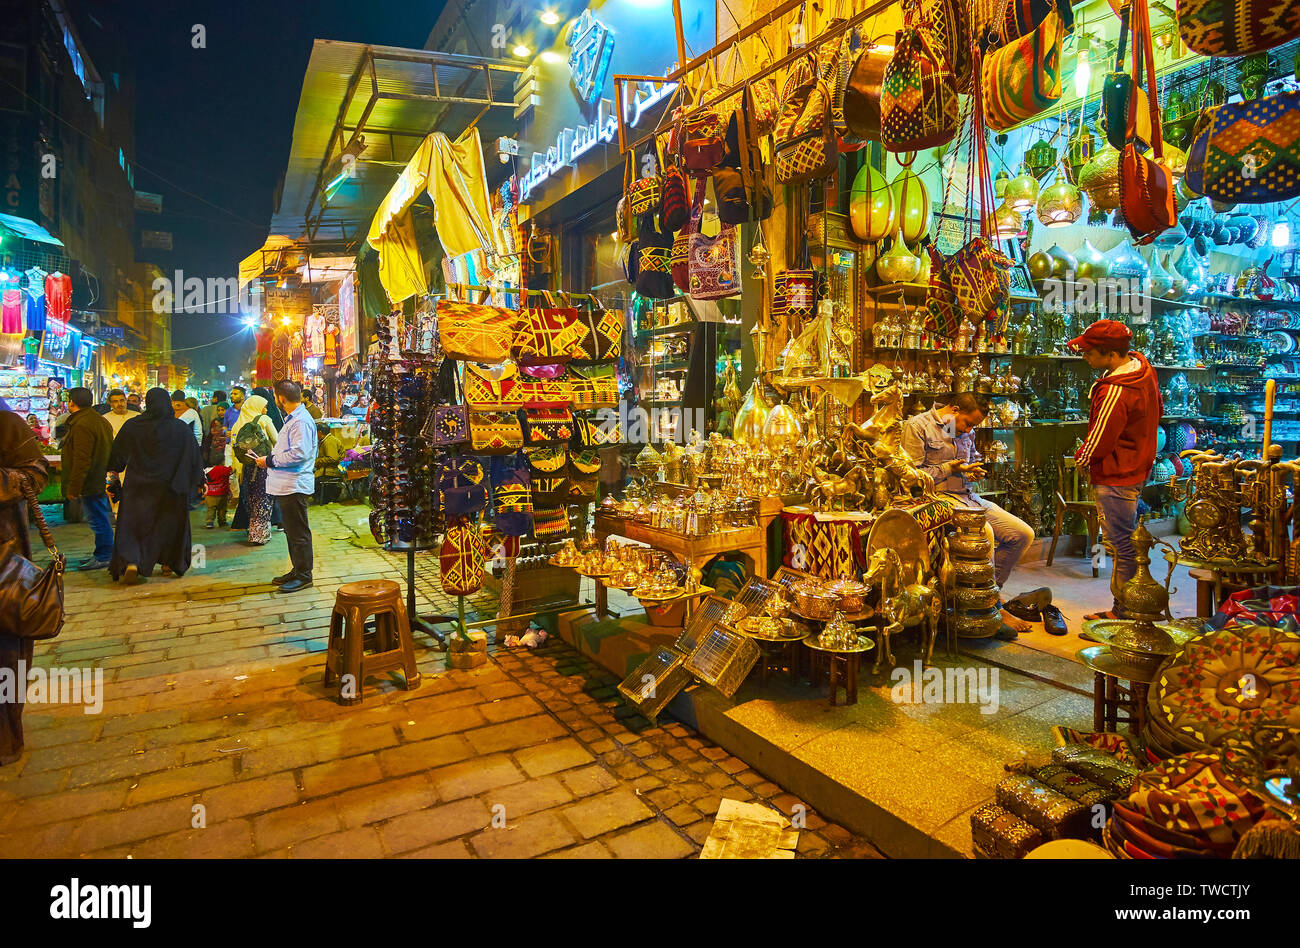 CAIRO, EGYPT - DECEMBER 22, 2017: Explore evening Al-Muizz street, lined with stalls of Souk Khan El Khalili Bazaar, full of local souvenirs, handicra Stock Photo